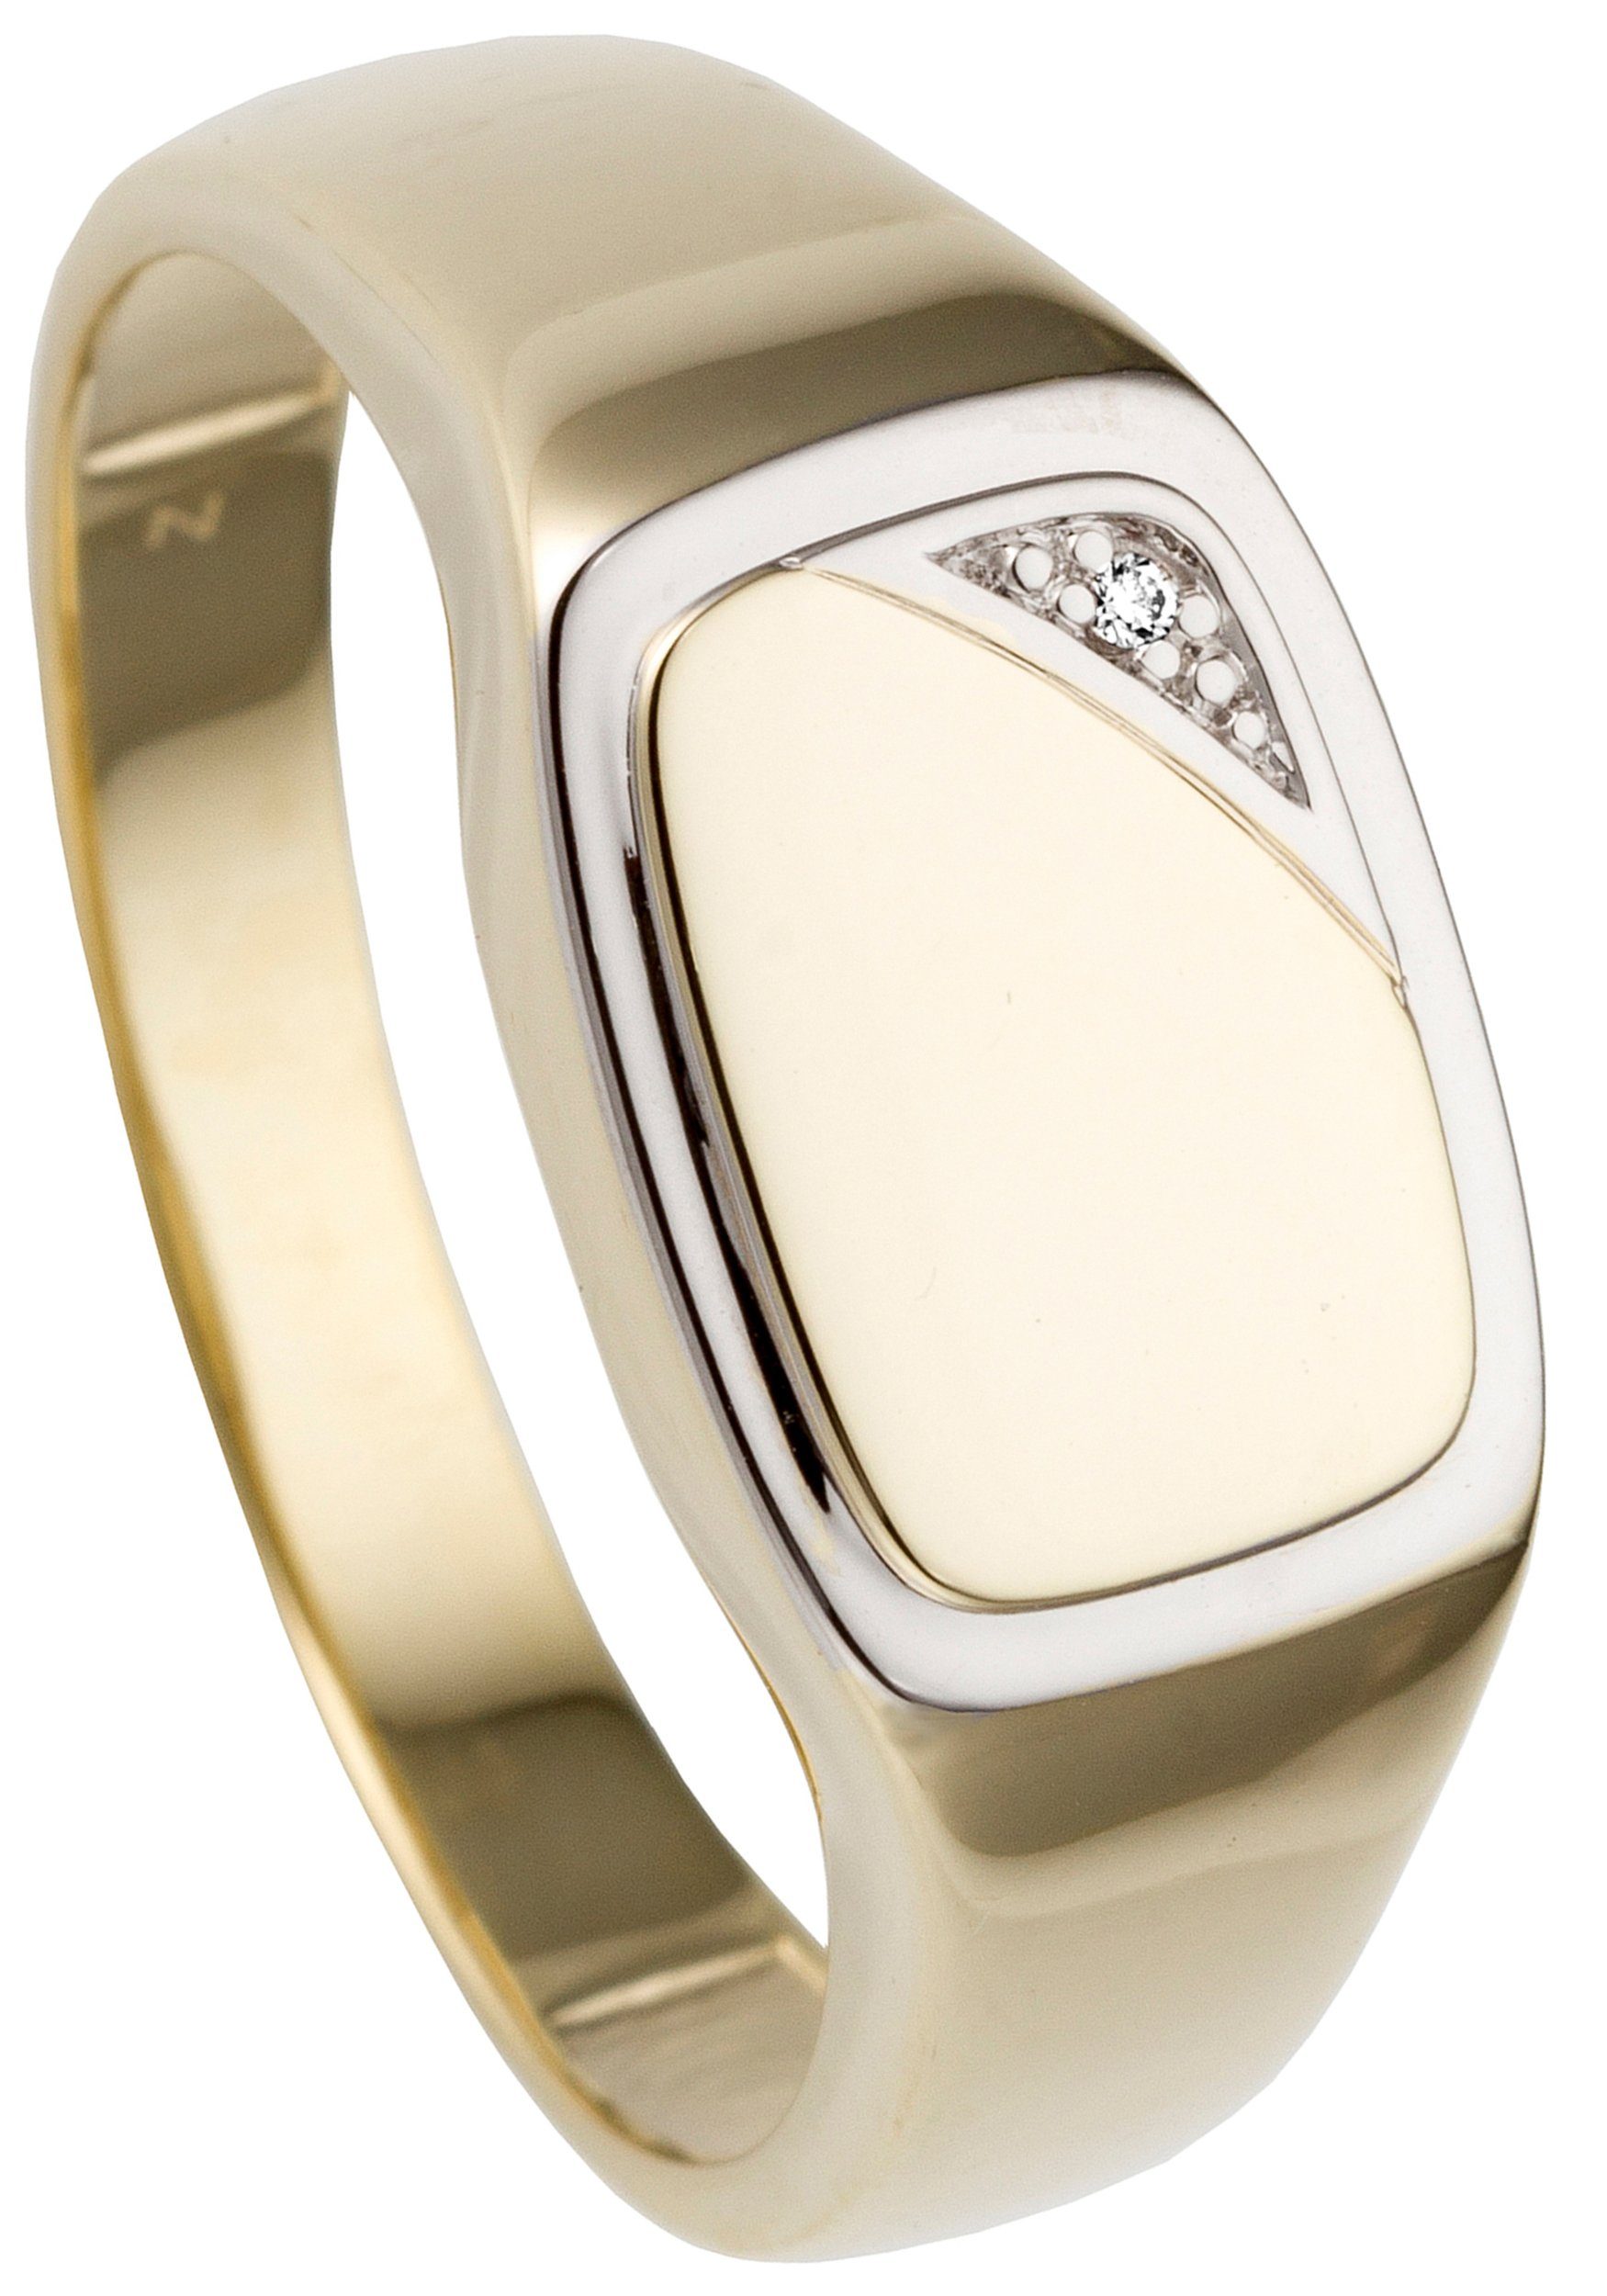 JOBO Fingerring Ring 585 Gold Diamant, bicolor mit